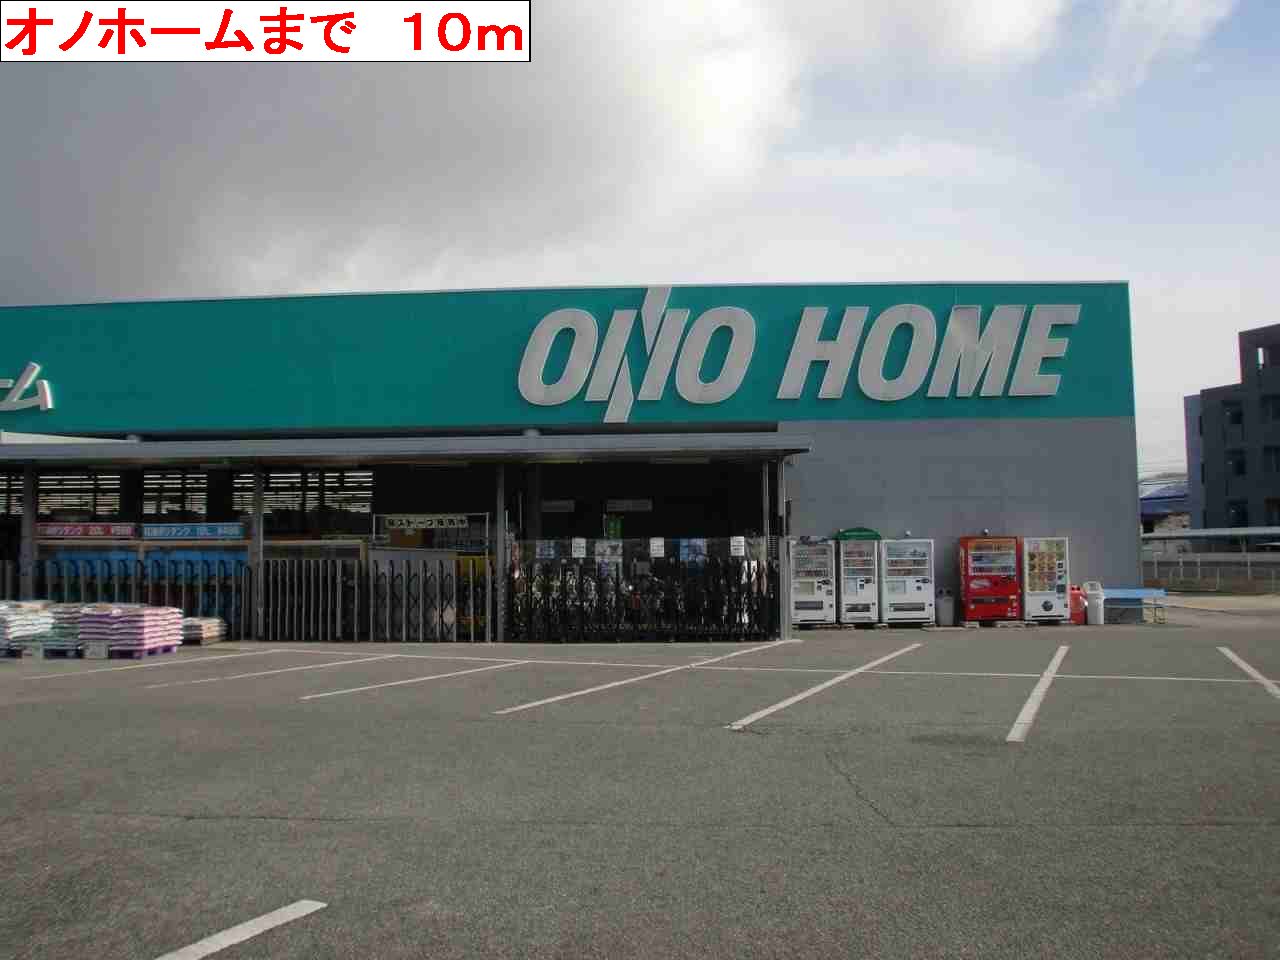 Home center. 10m to Onohomu (hardware store)